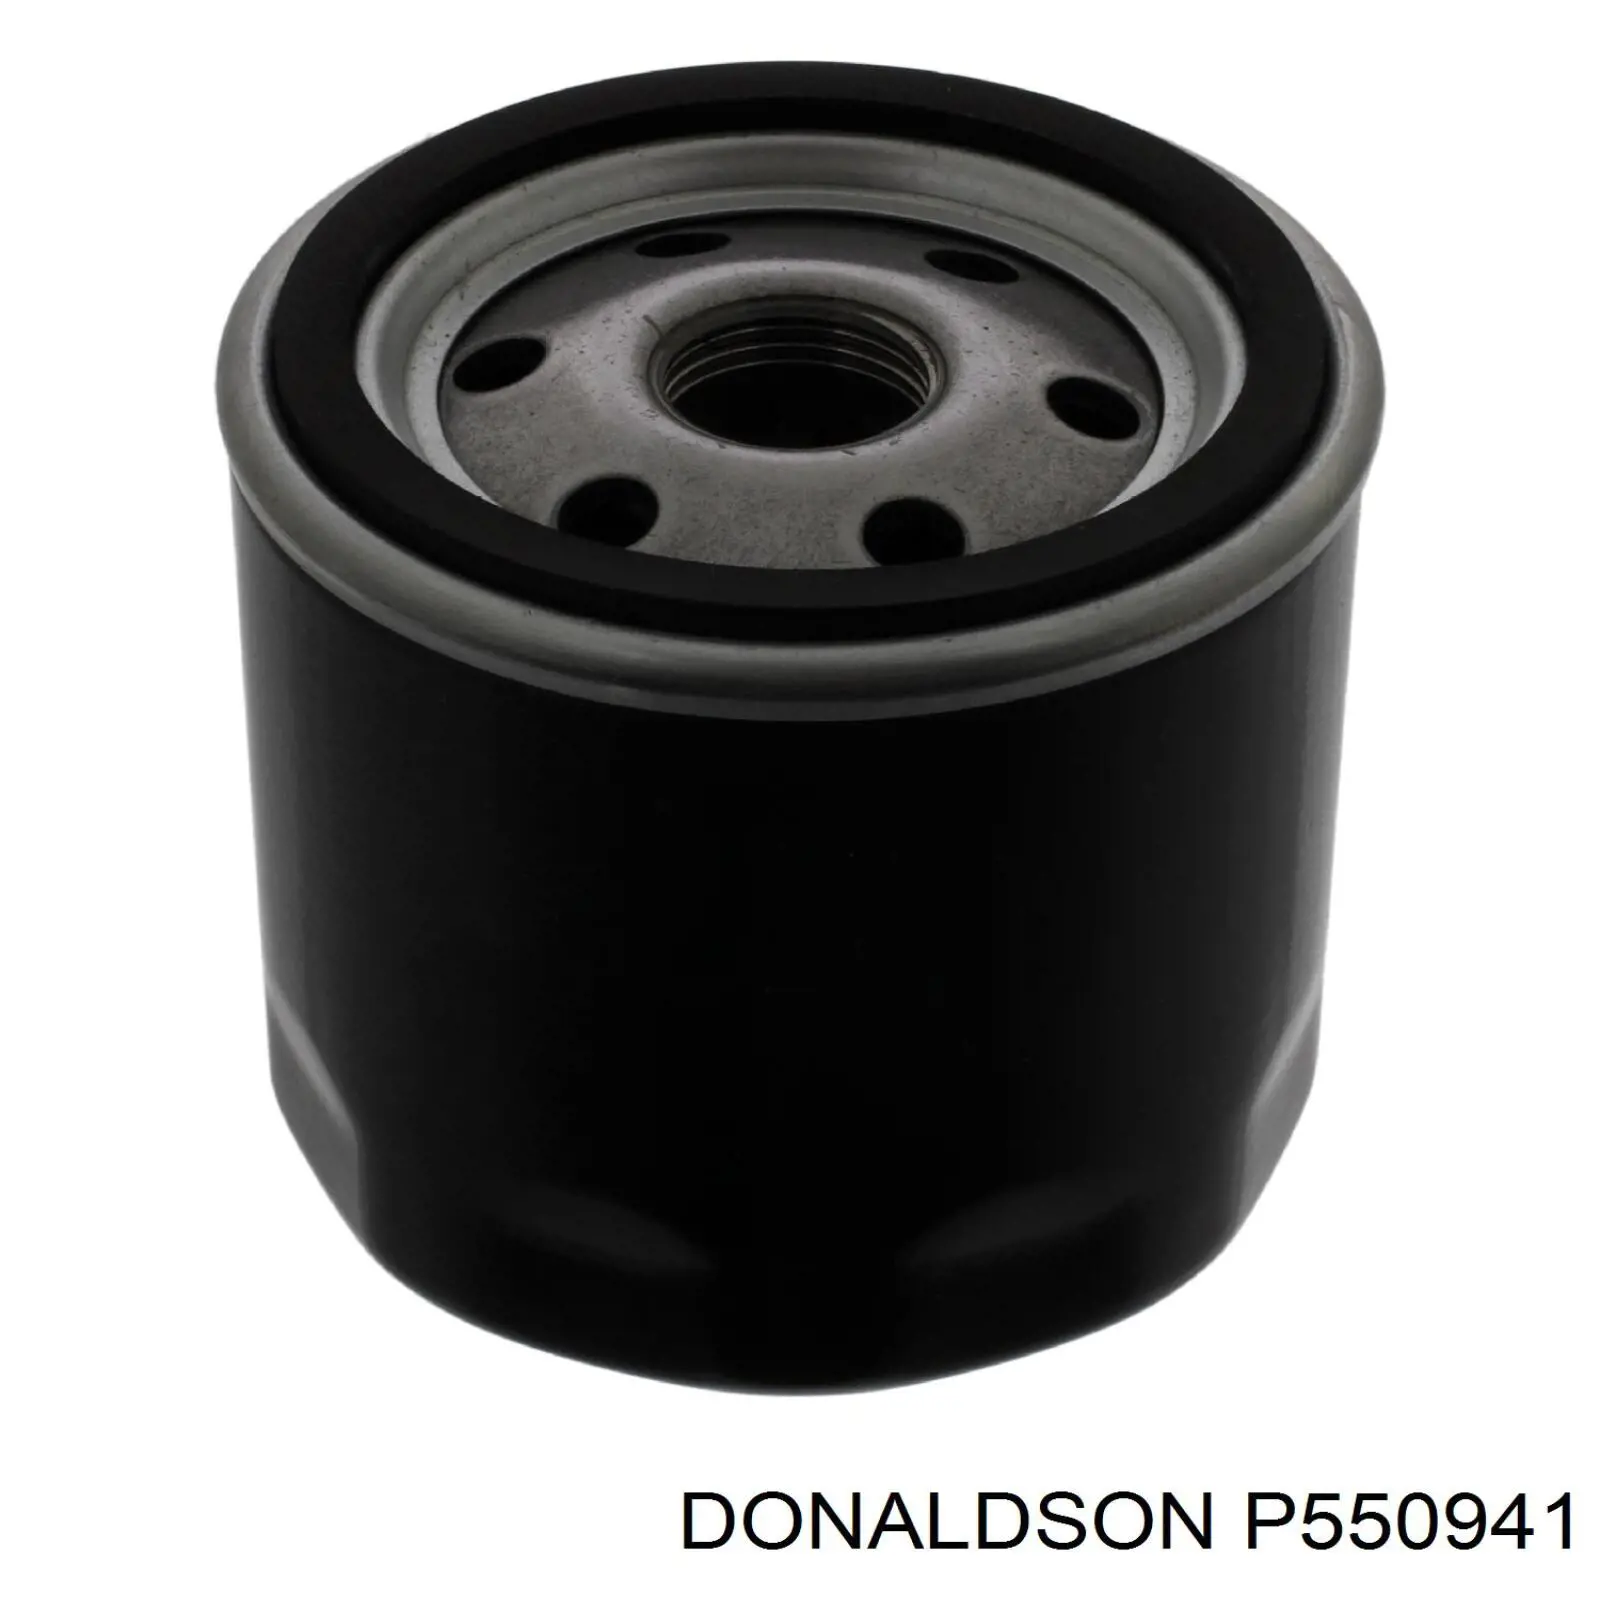 P550941 Donaldson filtro de aceite